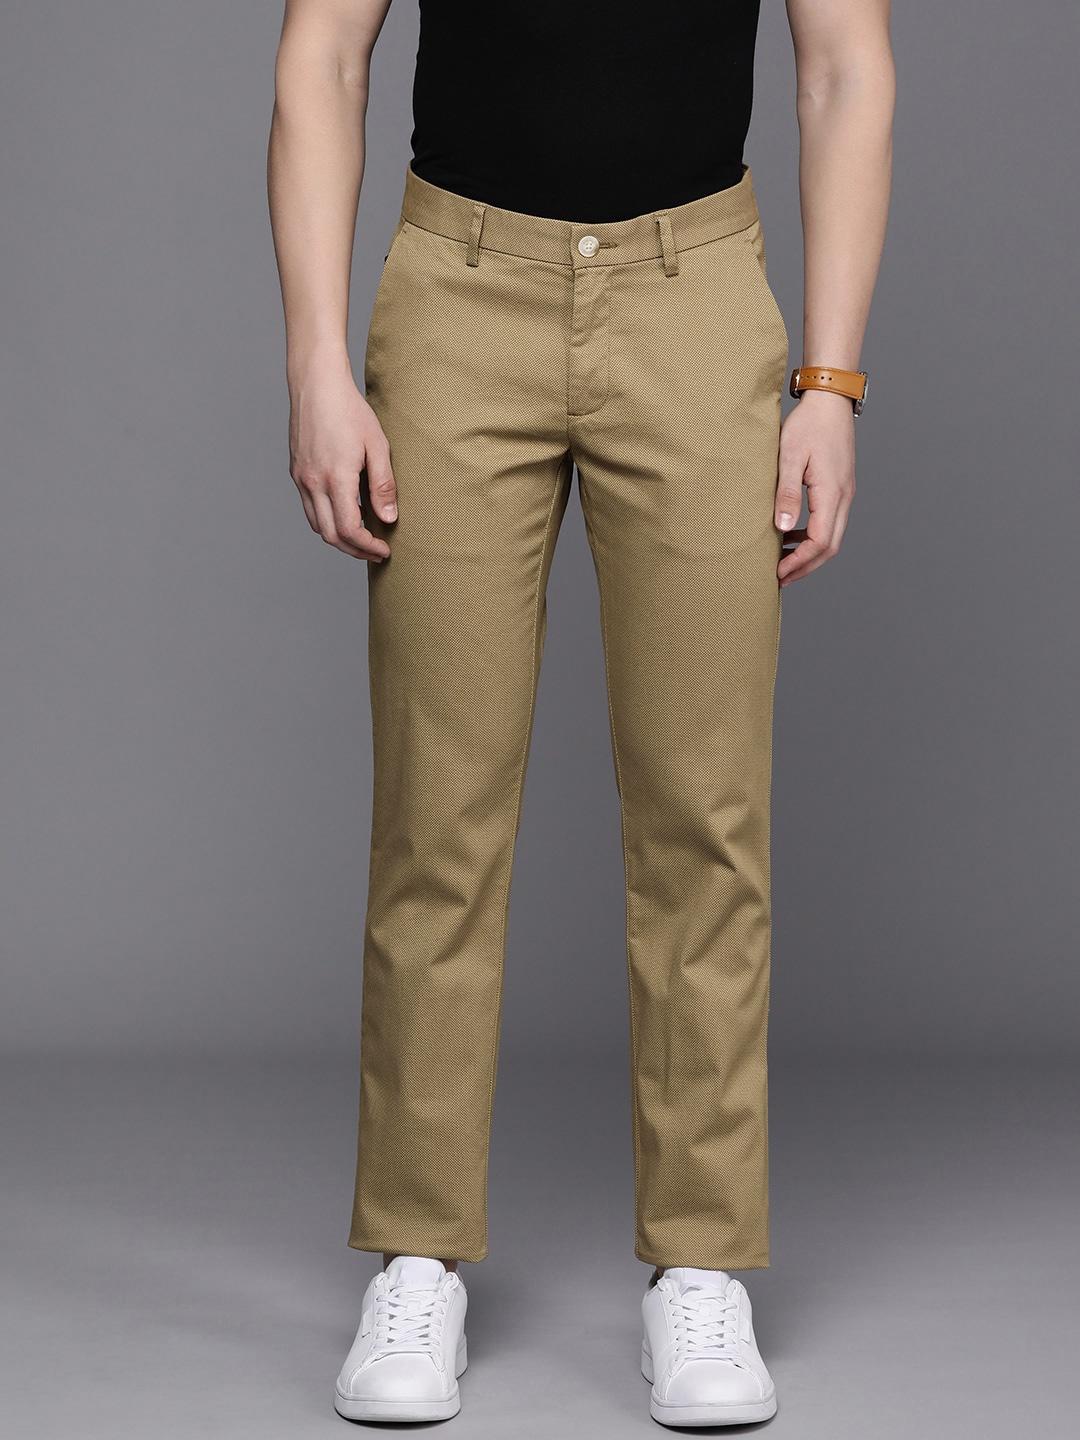 allen-solly-men-printed-slim-fit-trousers